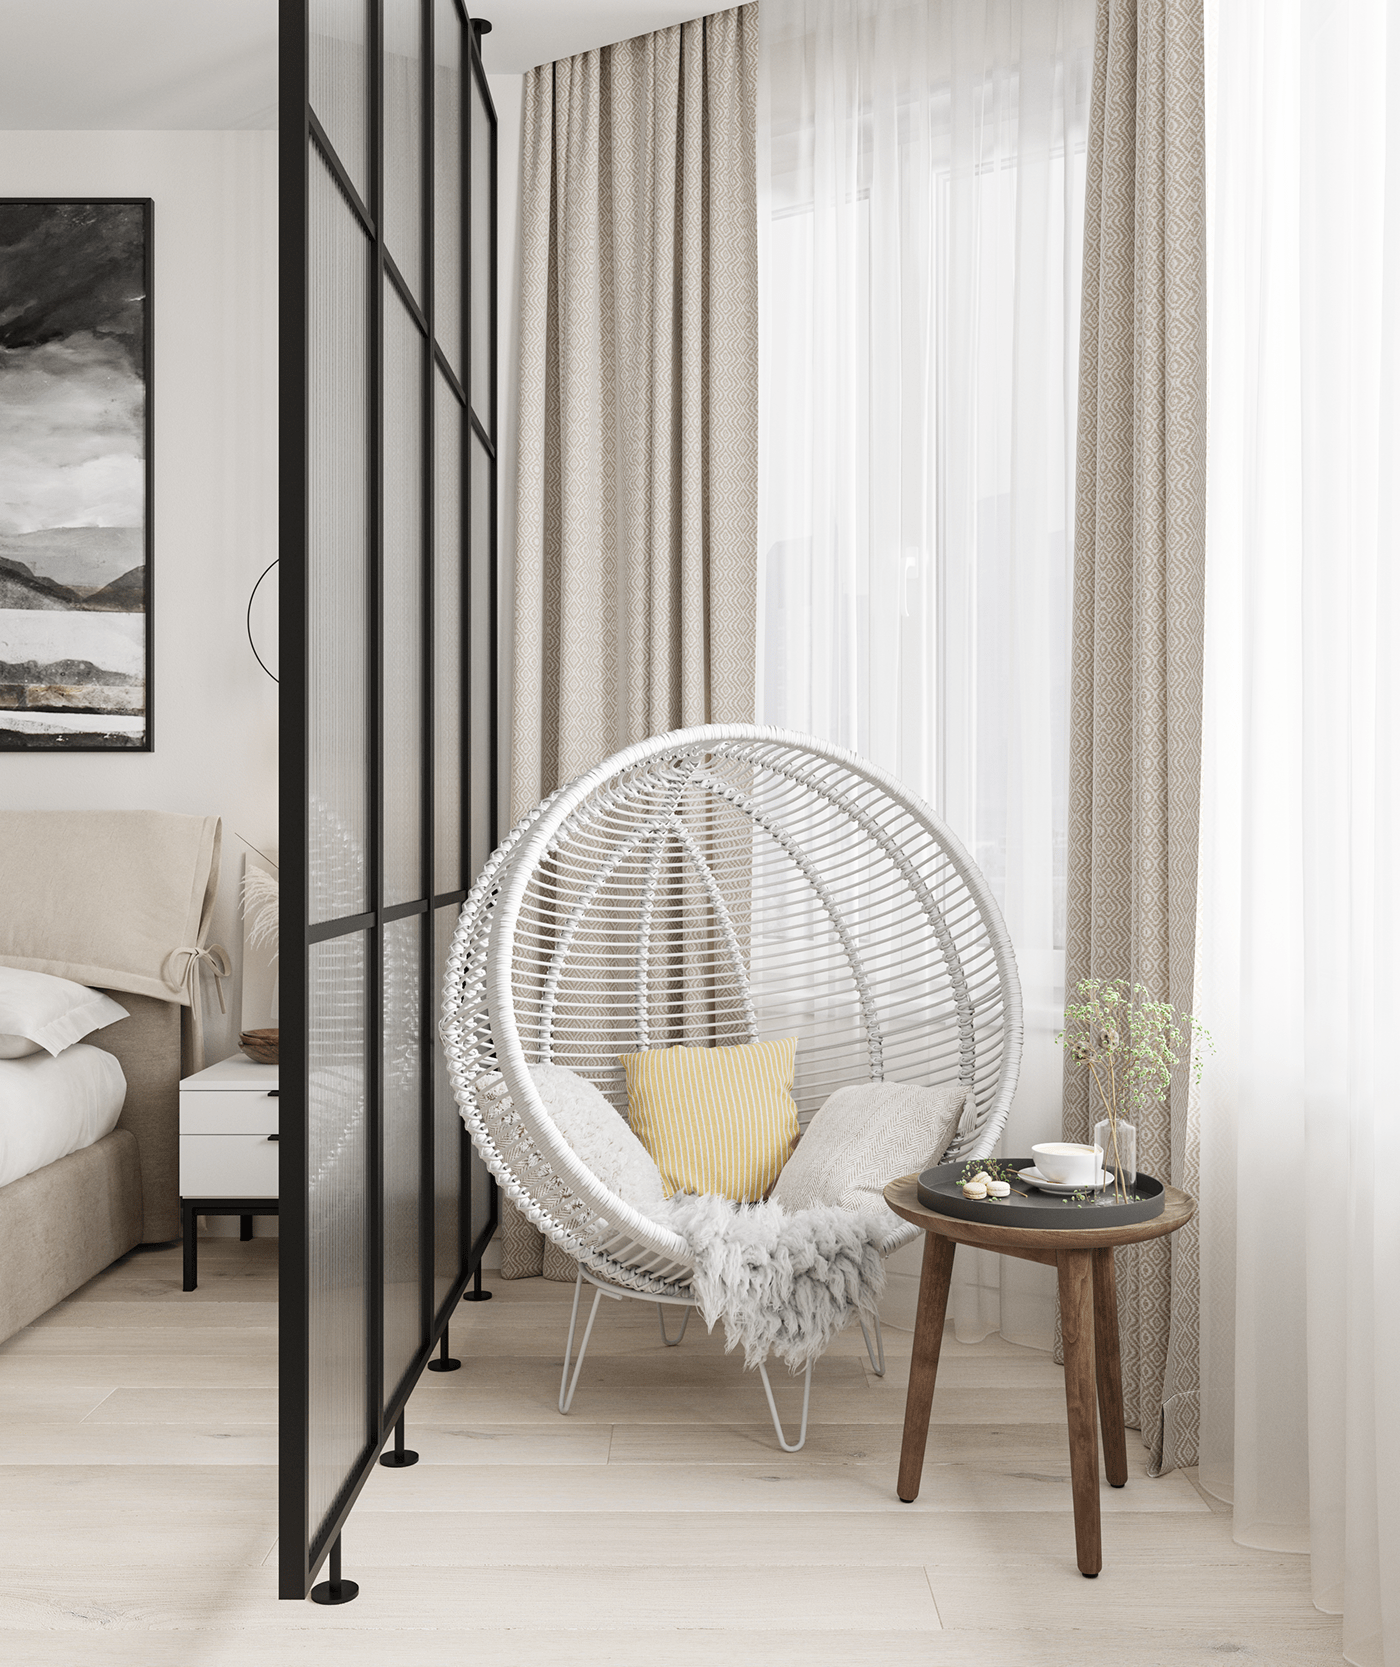 3ds max archviz bedroom black and white Interior monochrome Render visualization интерьер спальня